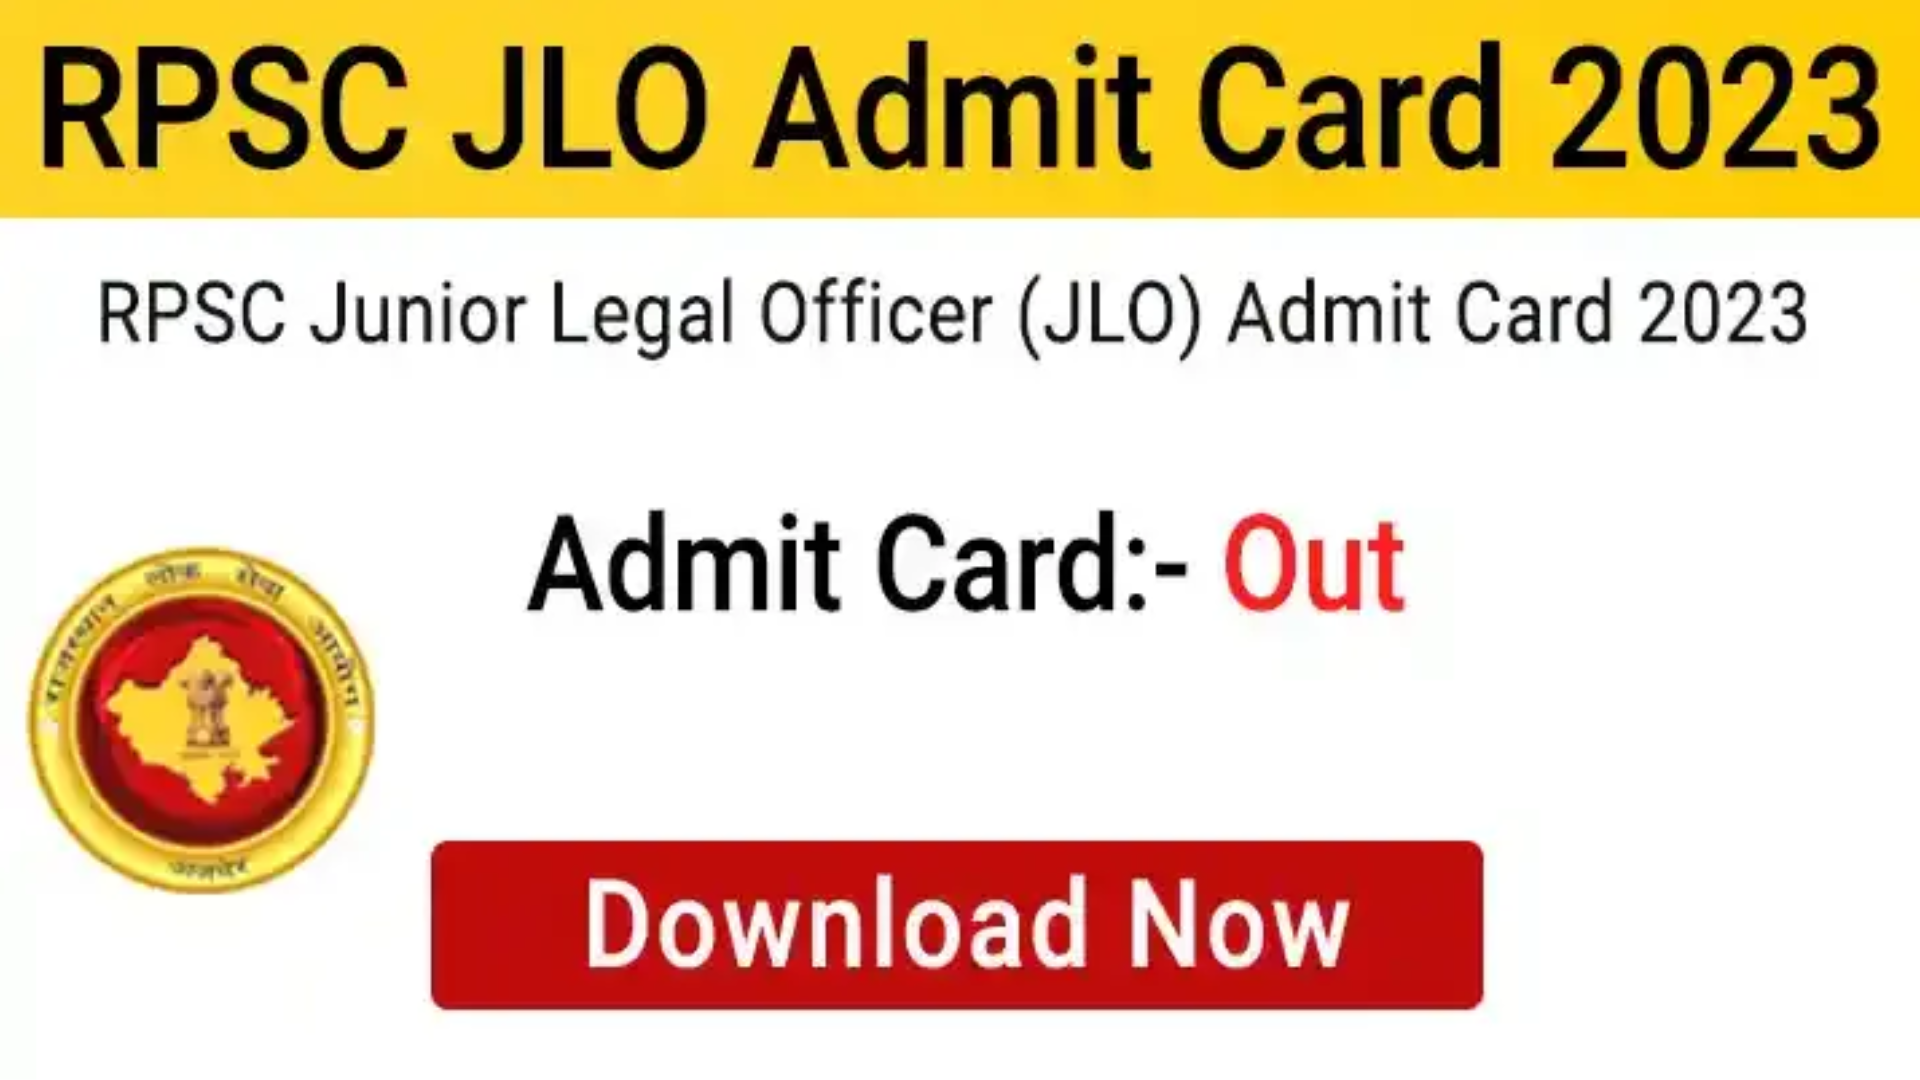 RPSC JLO Admit Card 2023 Released, Download Link for Junior Legal Officer Exam